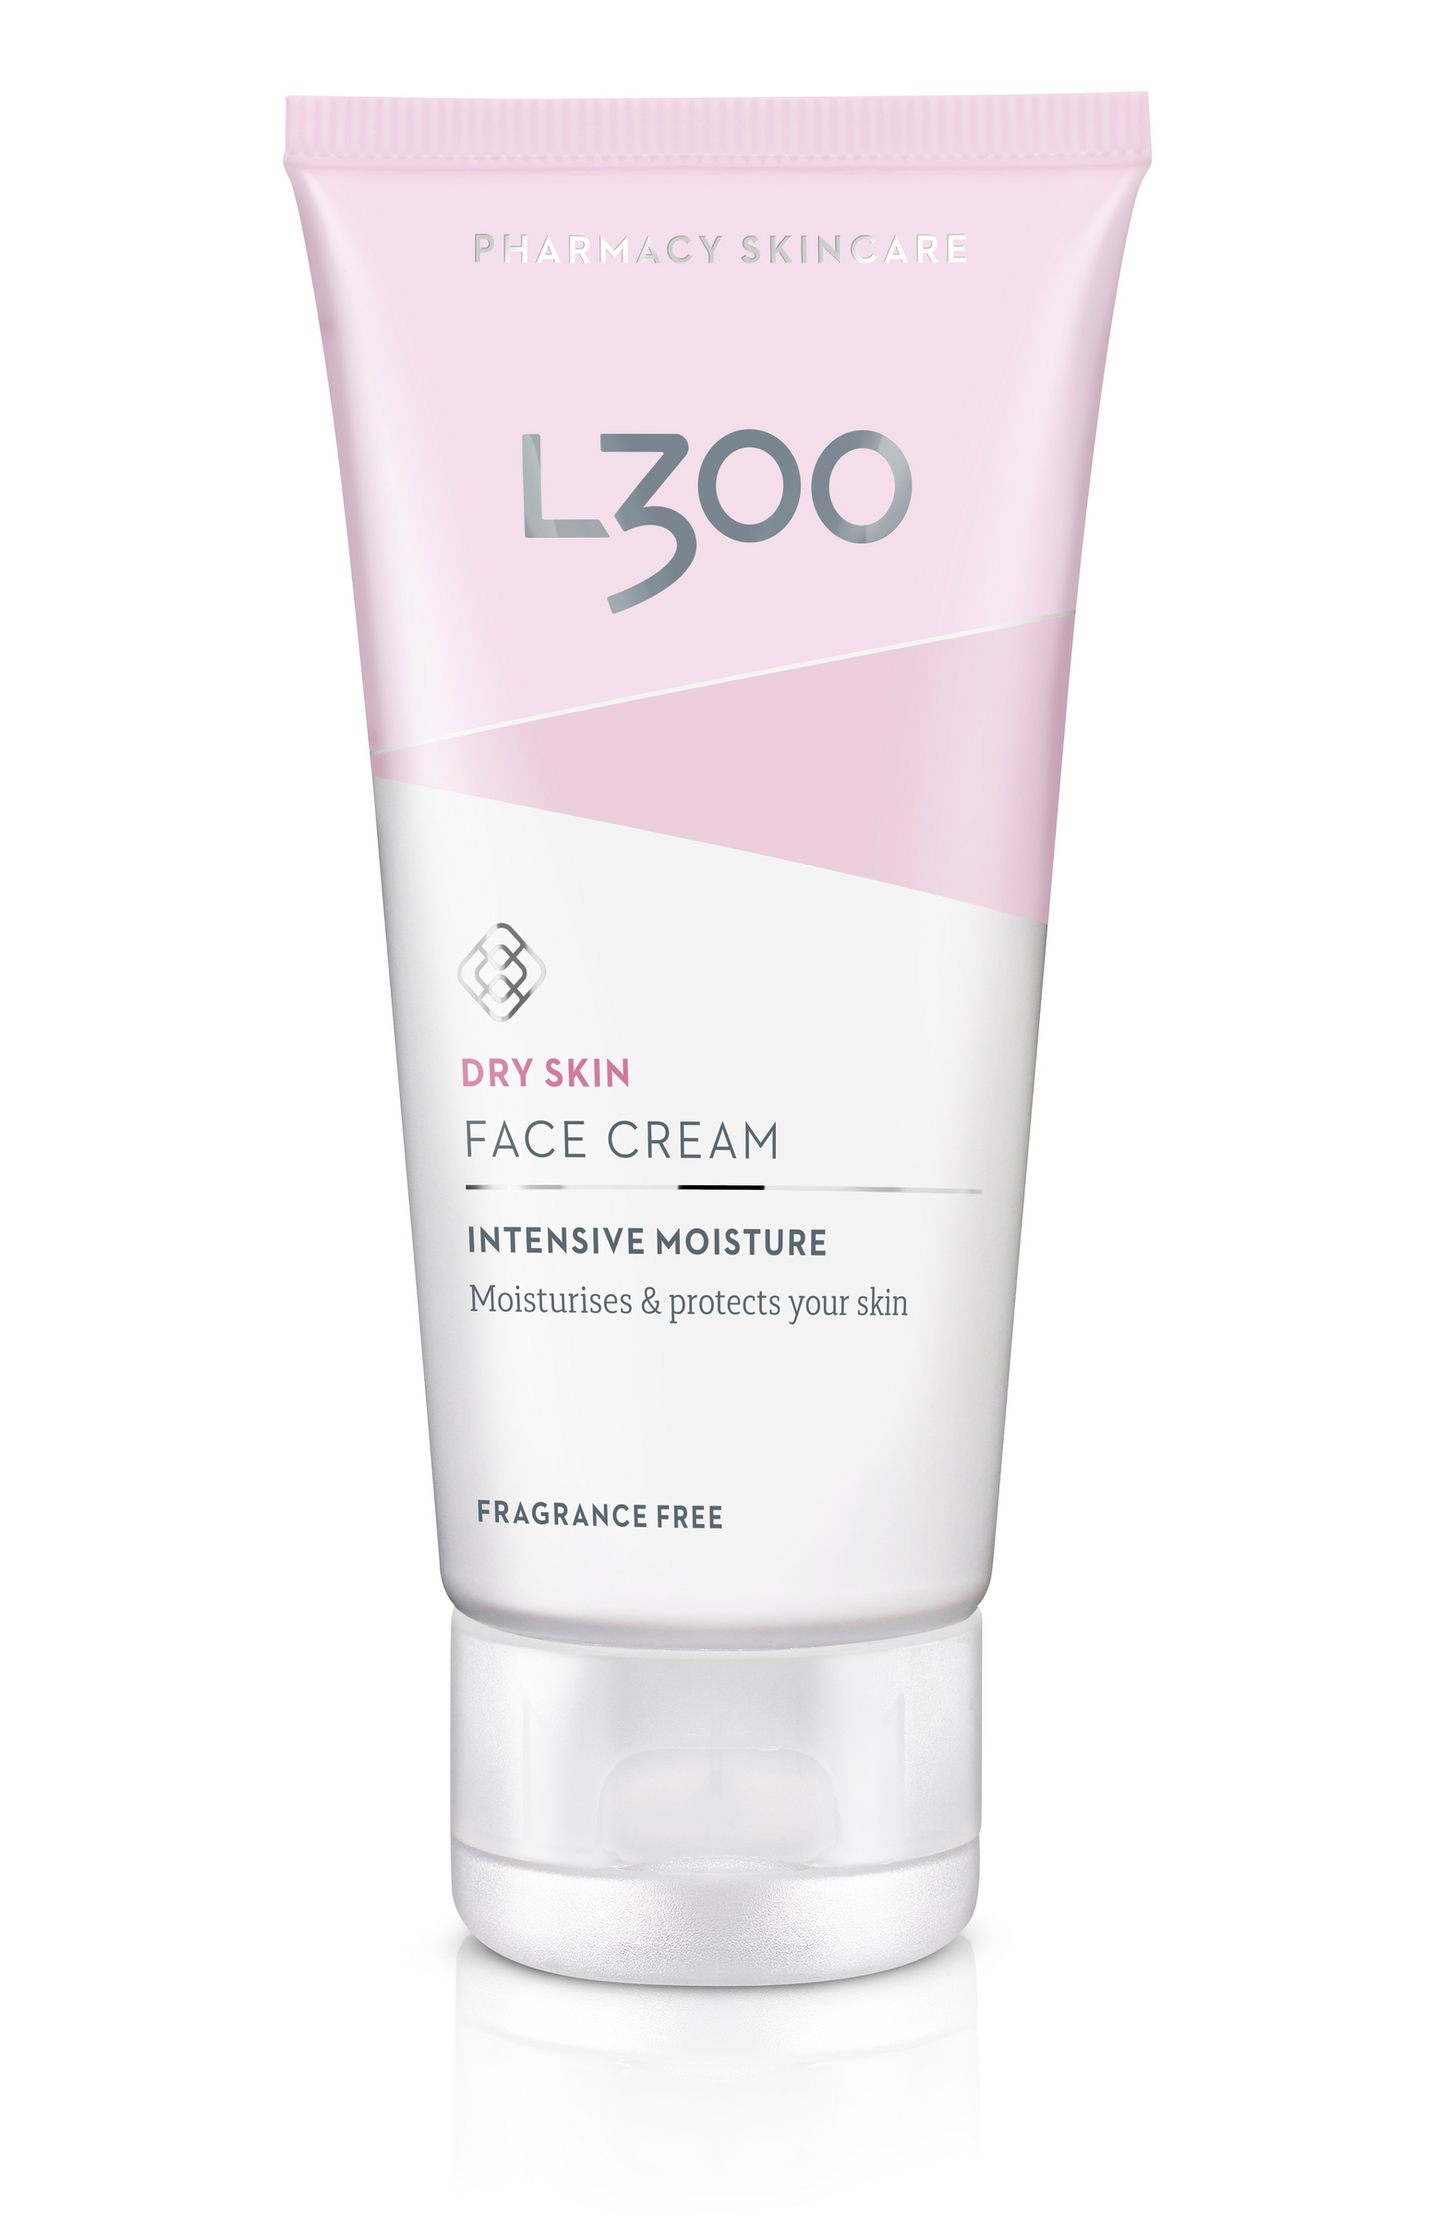 L300 kasvovoide 60ml Intensive Moisture Face Cream+ Dry Skin kuivalle iholle